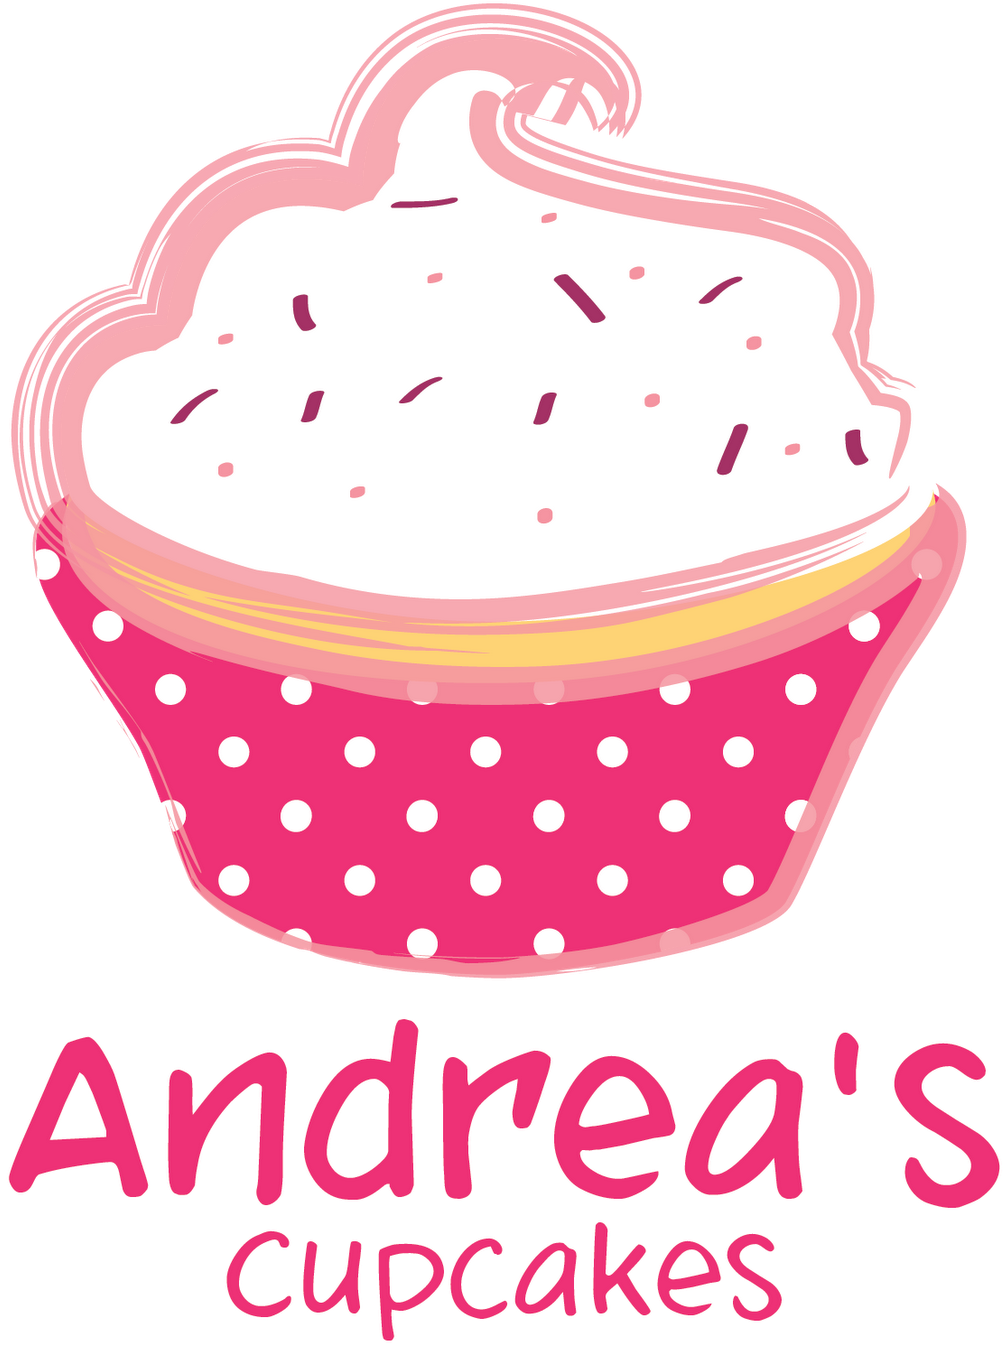 Andreas Cupcakes Logo